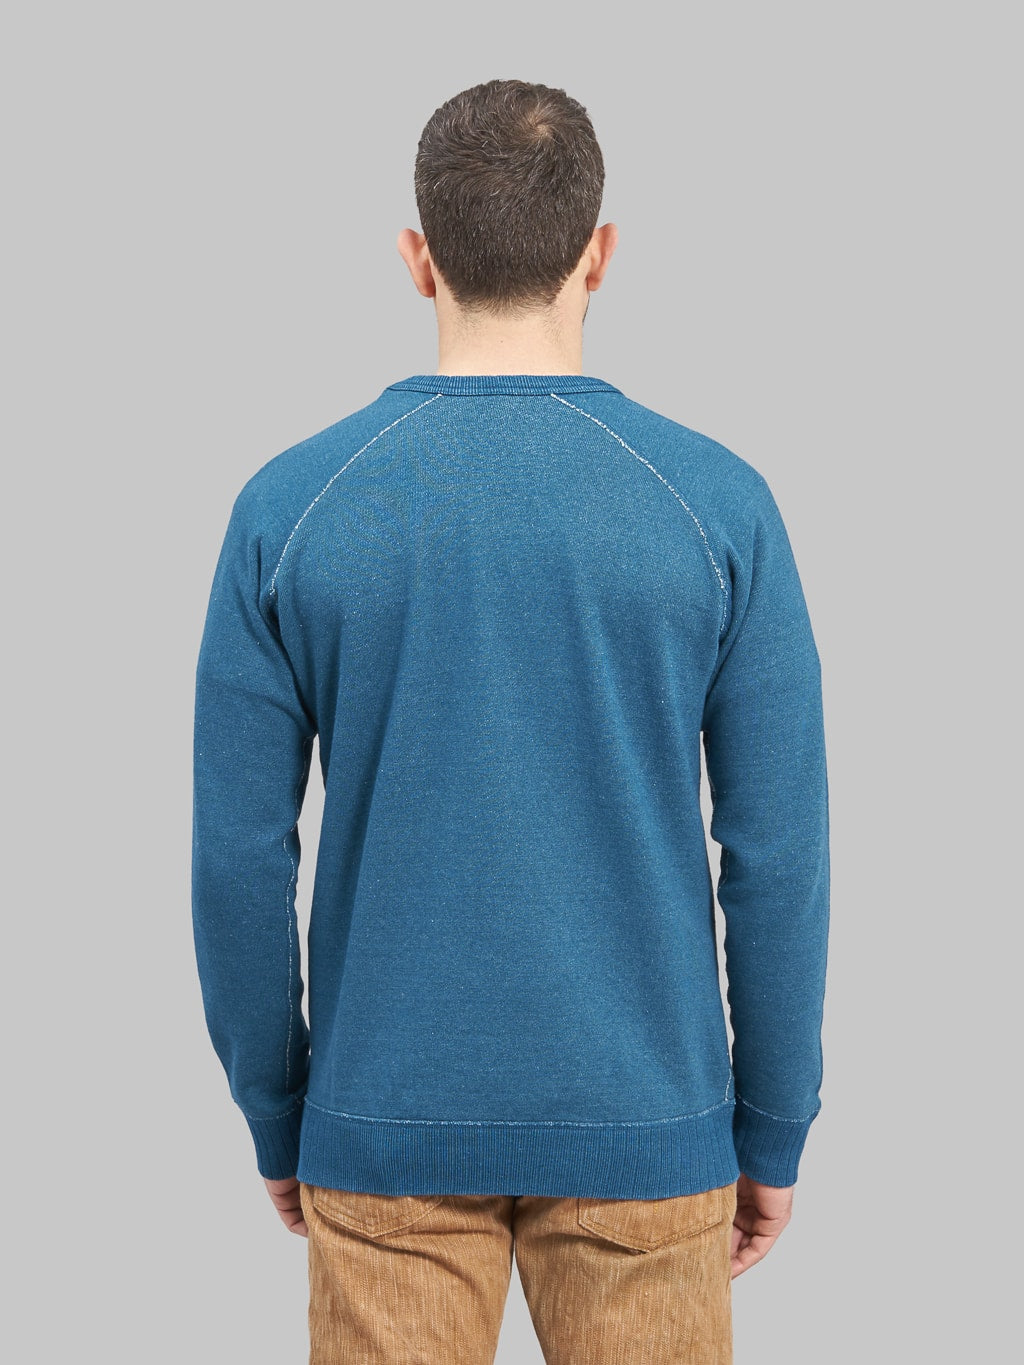 Pure Blue Japan Slub Yarn Sweatshirt Greencast Indigo back fit